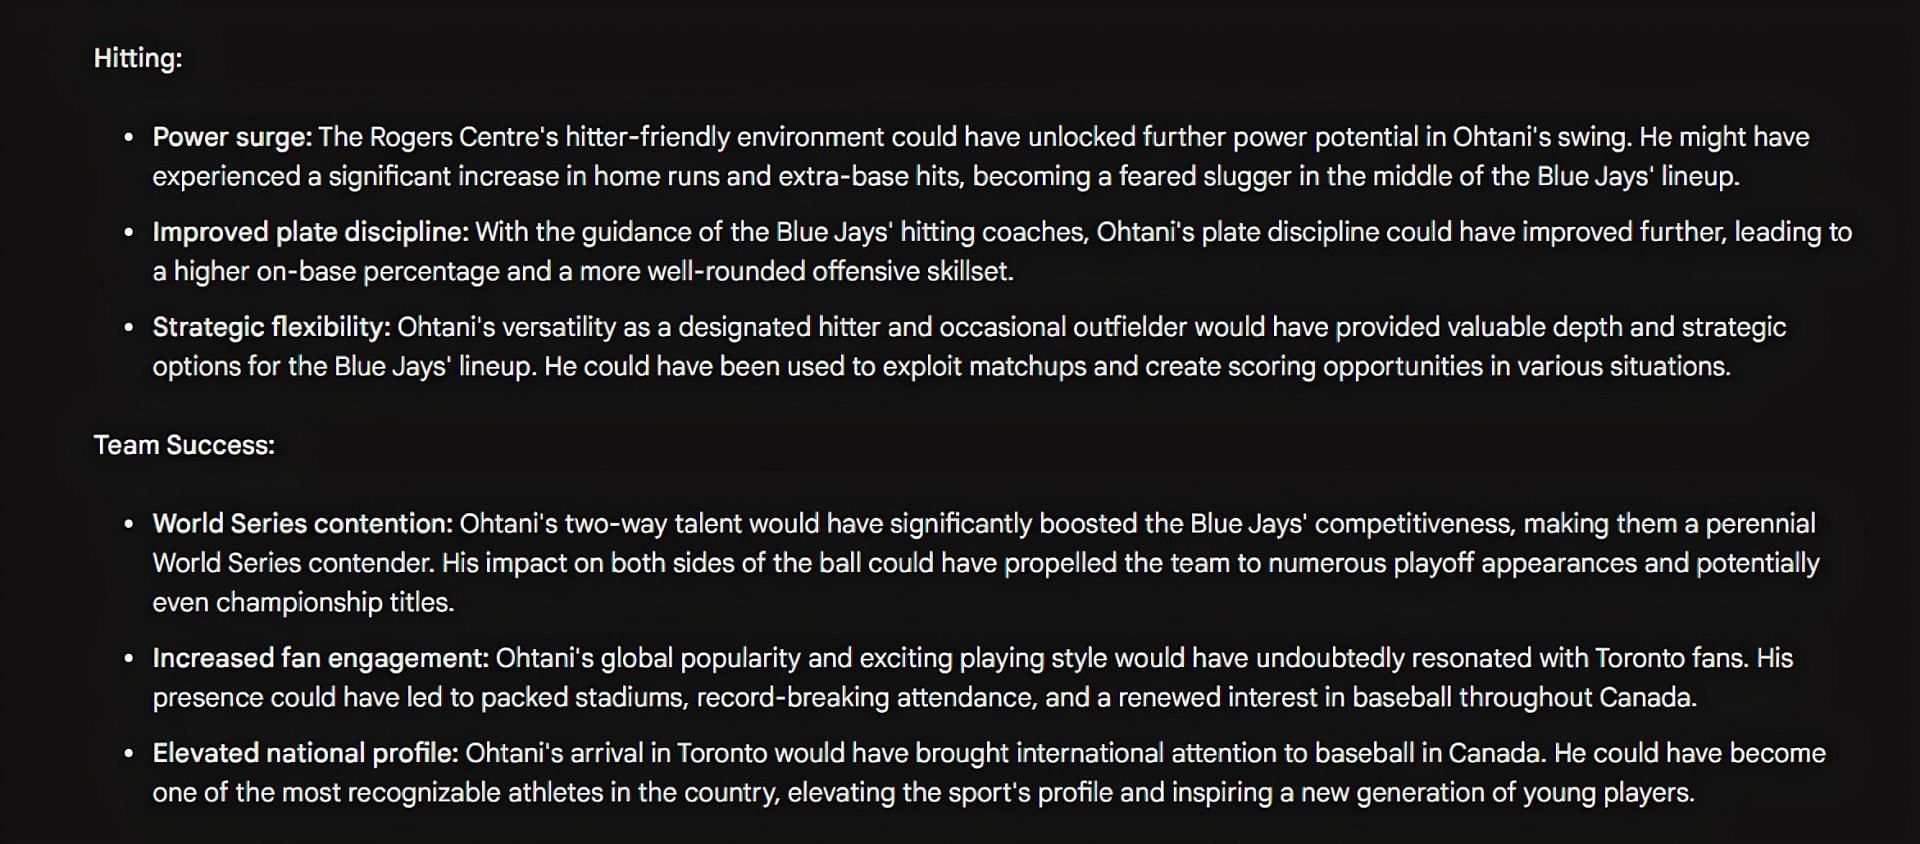 AI response predicts Ohtani&#039;s Blue Jays career